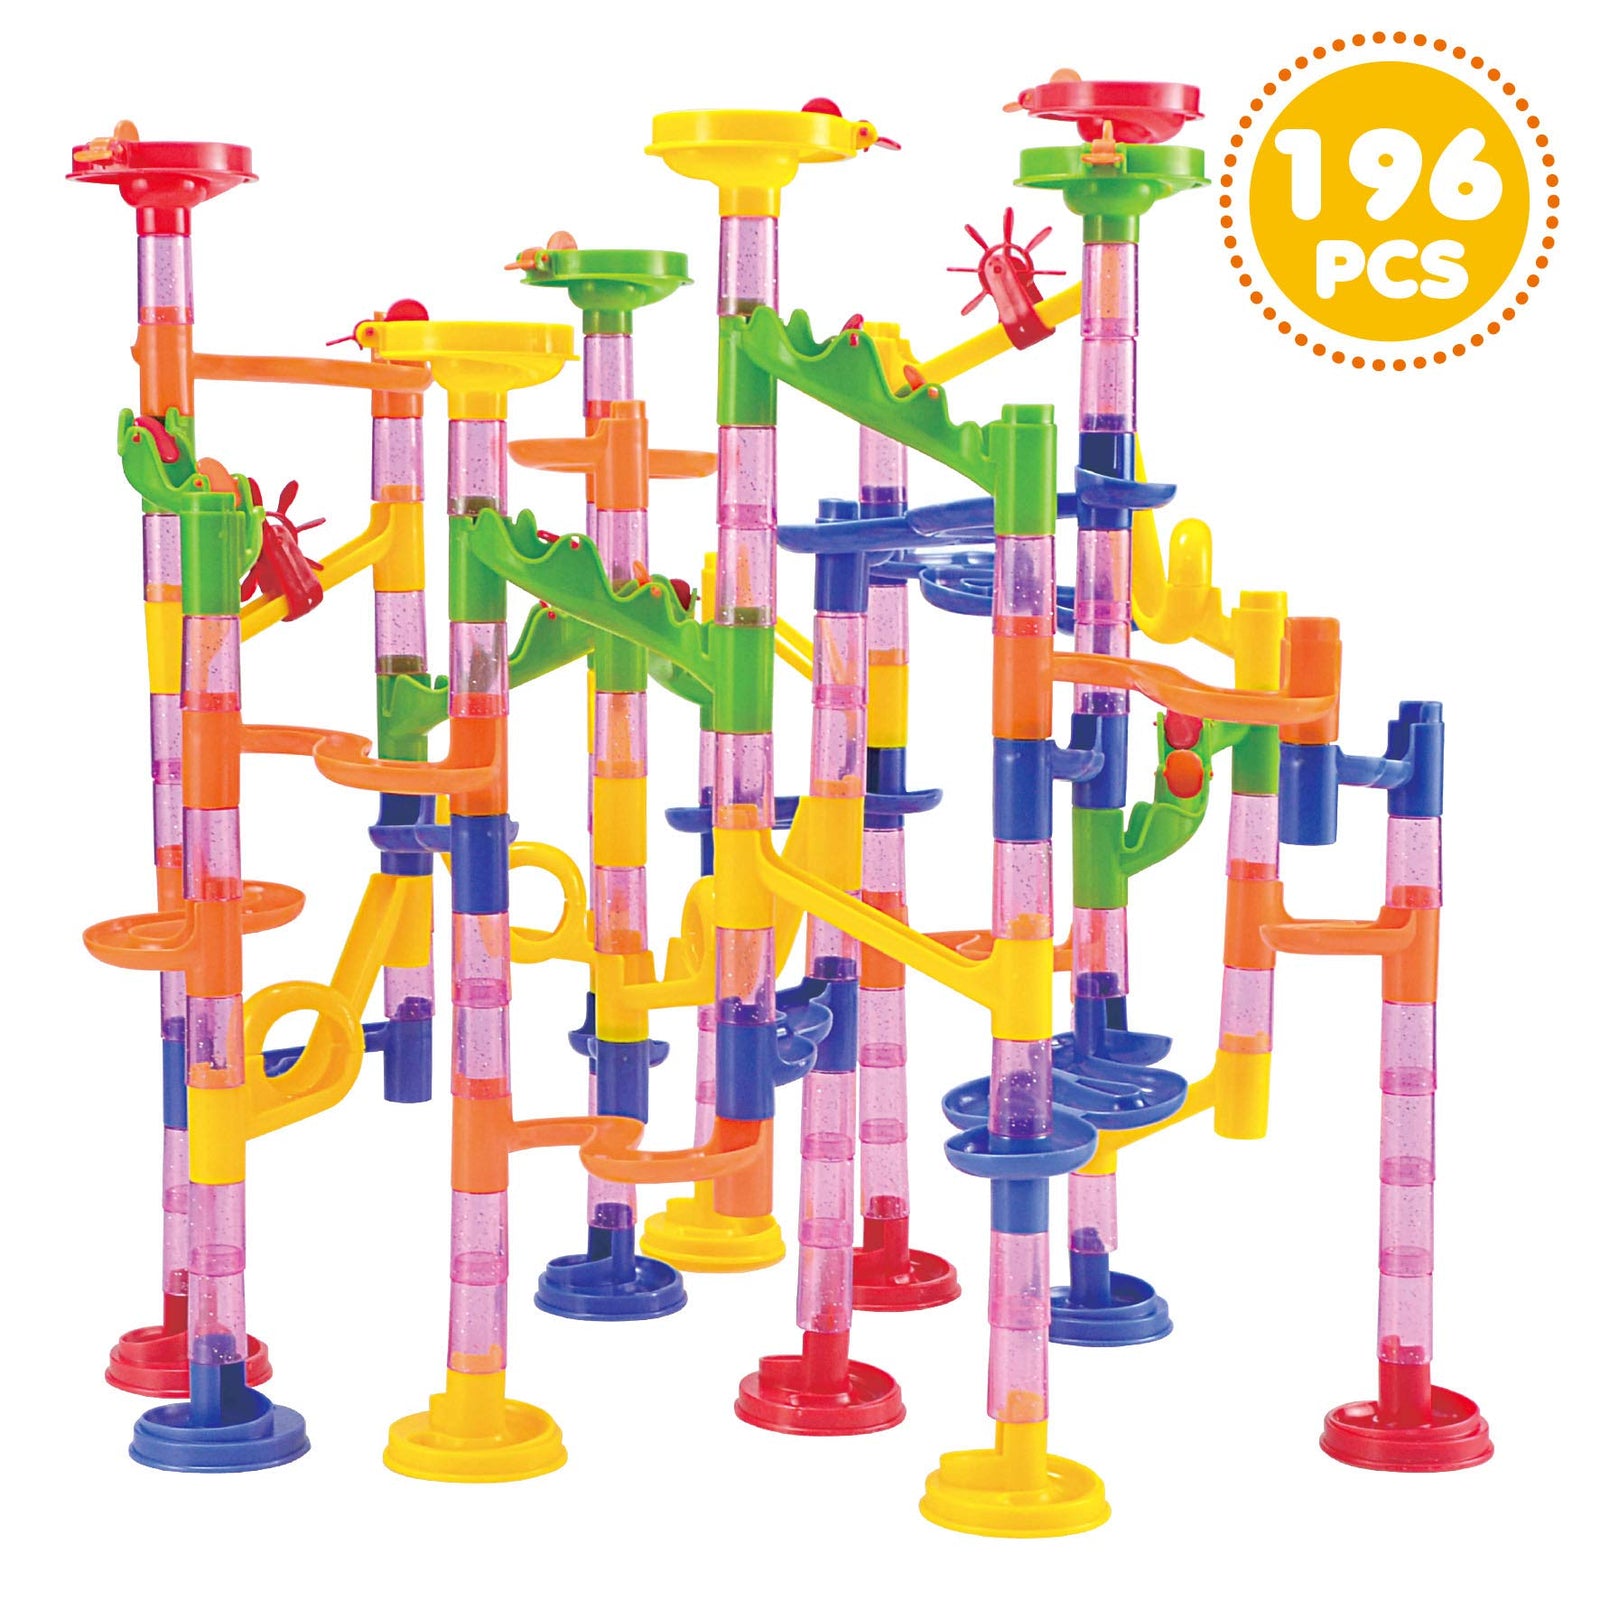 JOYIN Marble Run Premium Set（196 Pcs）, Construction Building Blocks Toys, STEM Educational Toy, Building Block Toy(156 Translucent Plastic Pieces+ 40 Glass Marbles)